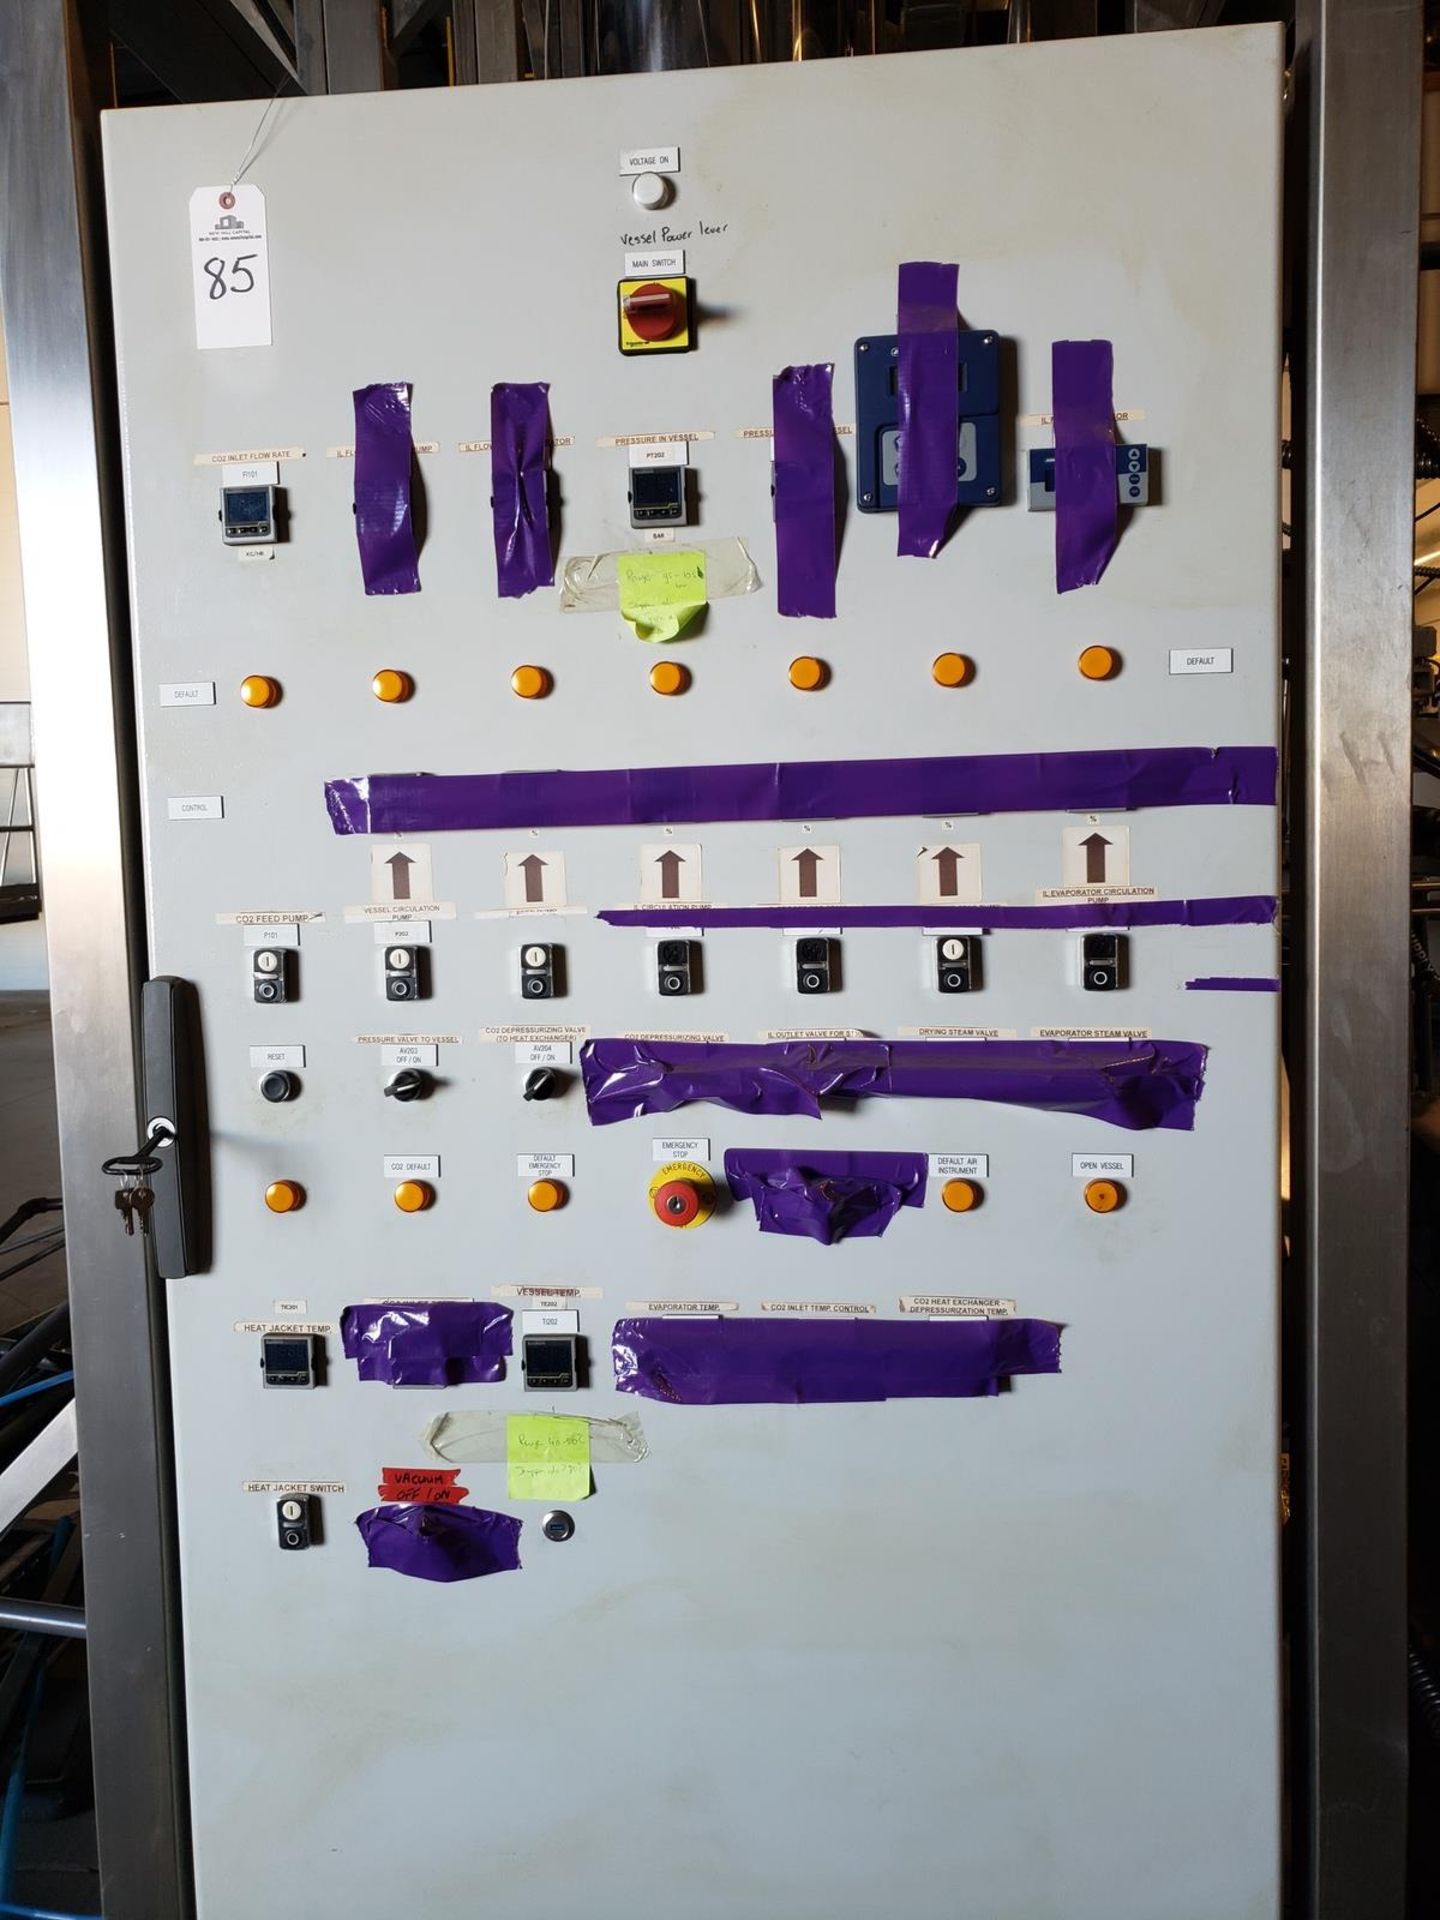 Separex/Kraken 450 Liter CO2 Extraction Machine, S/N 4346 | Rig Fee $2100 - Image 3 of 11